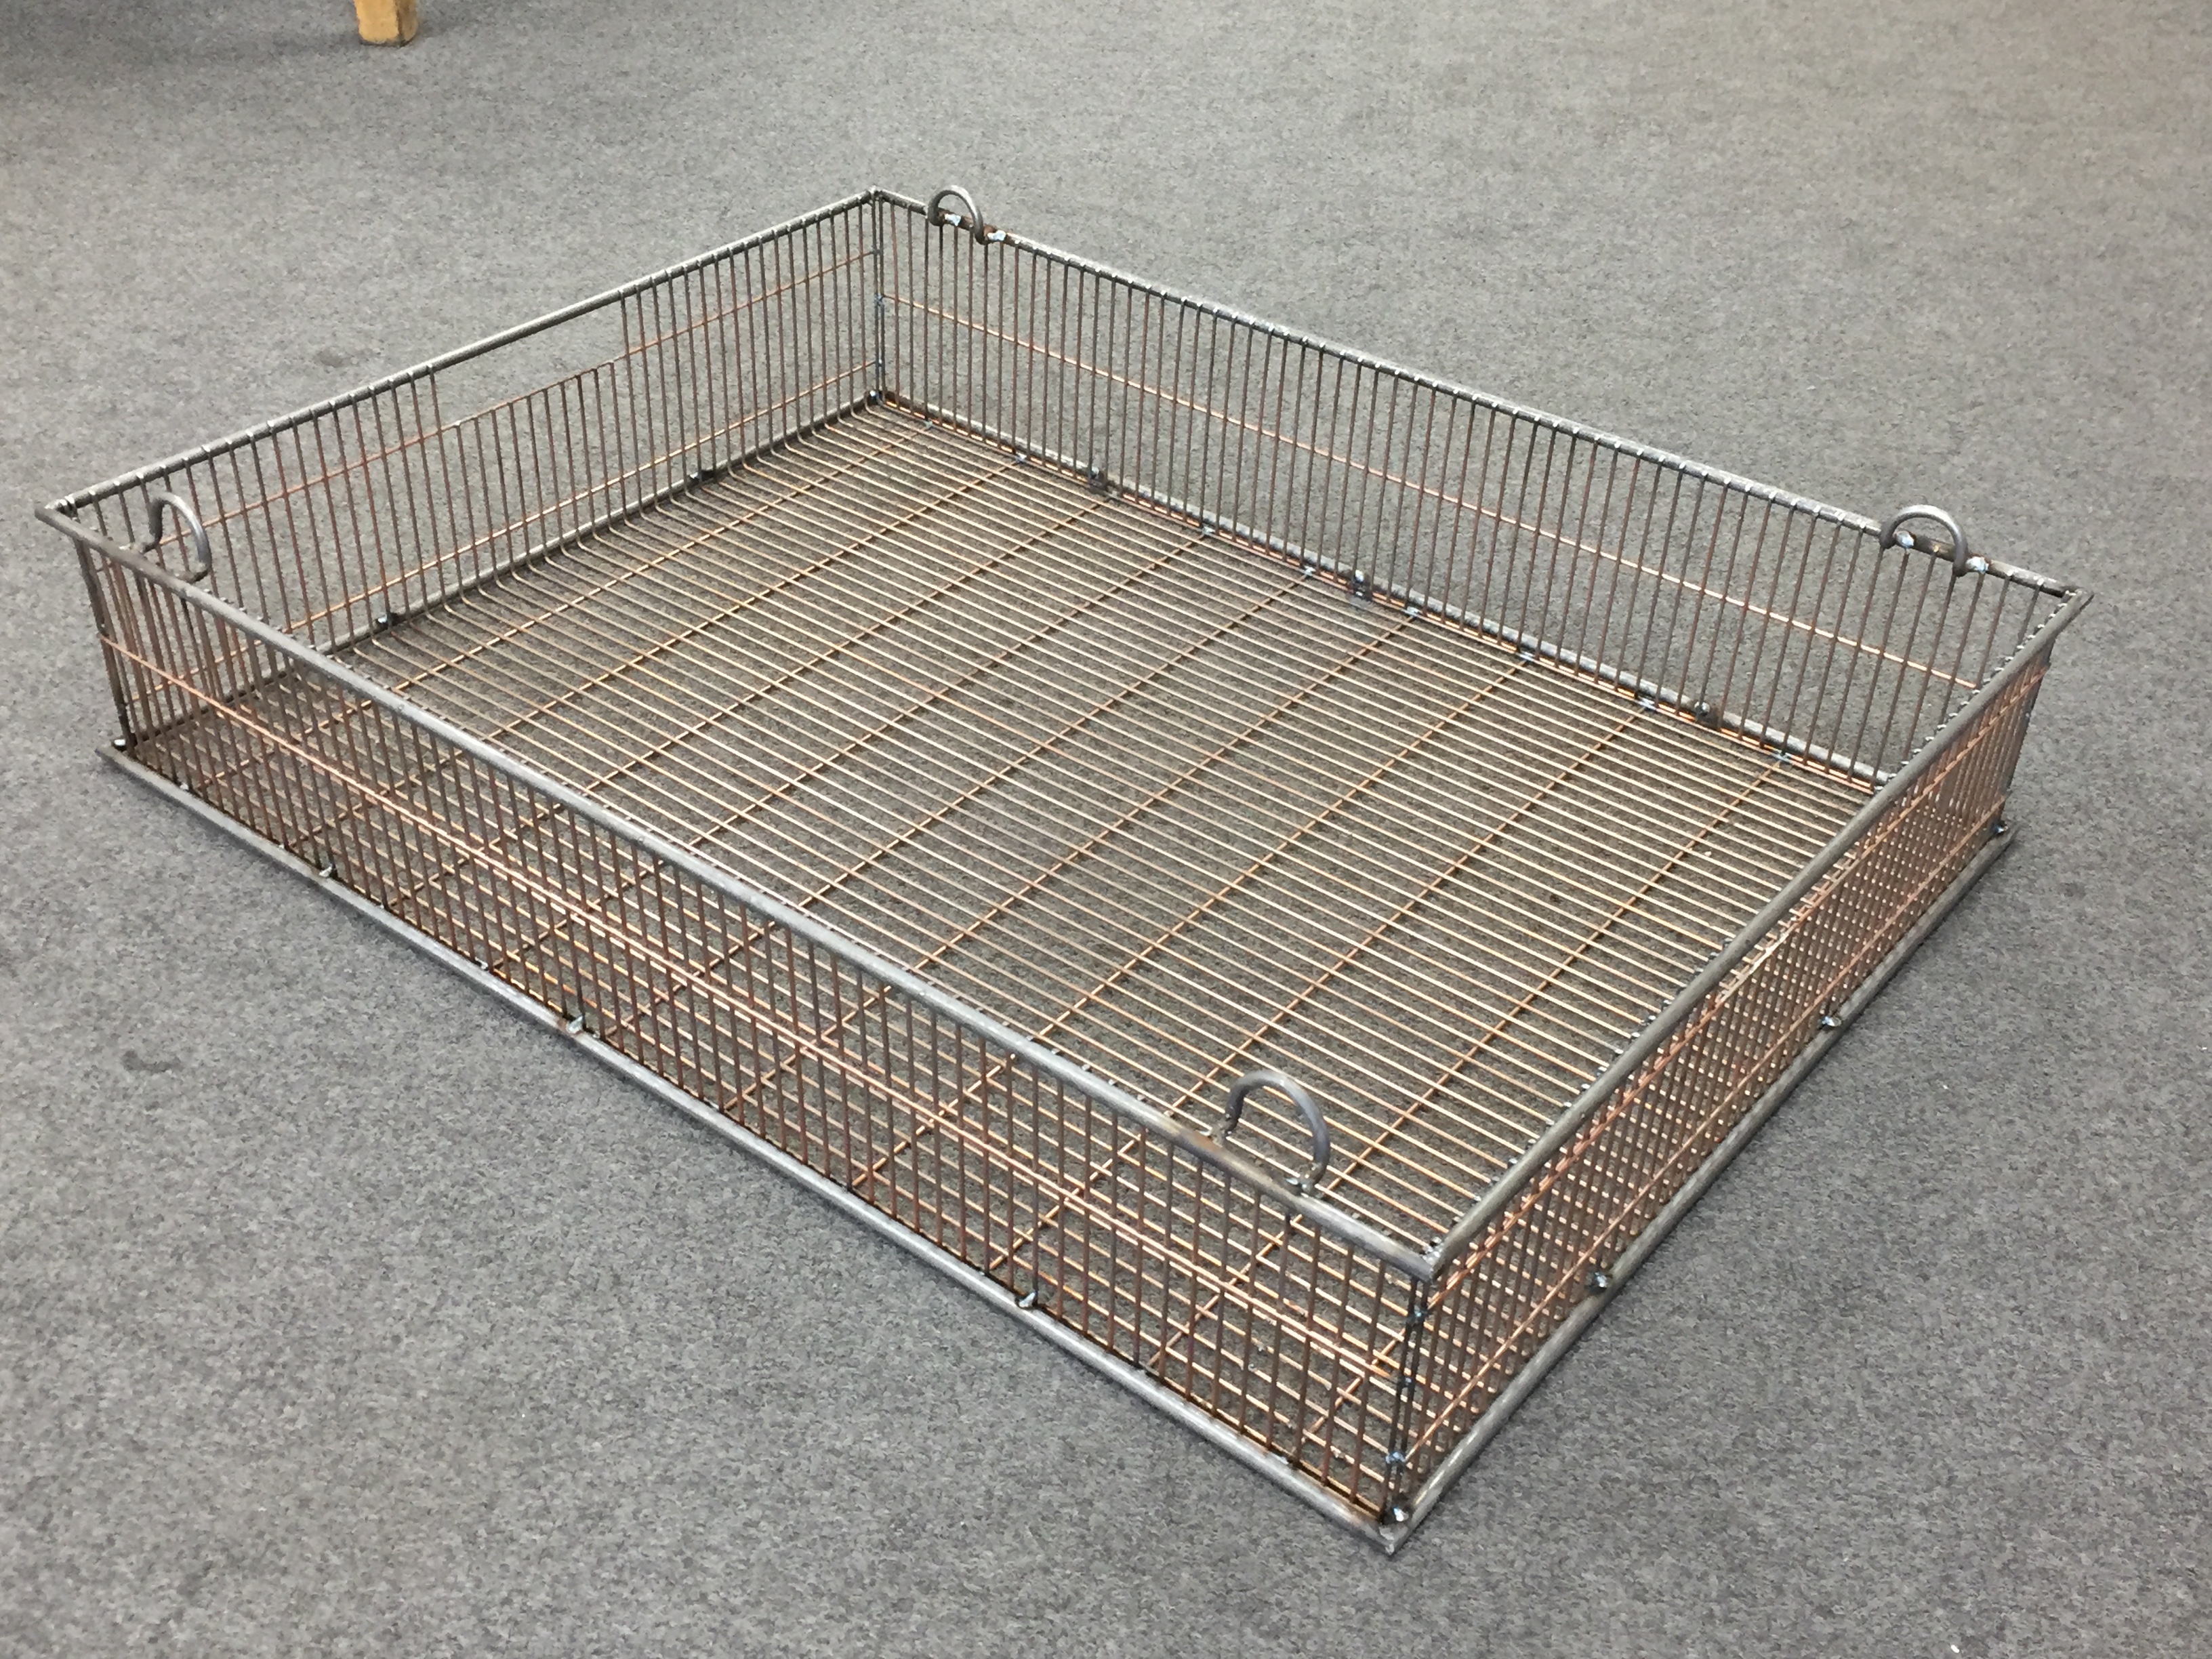 Prototype conveyor baskets